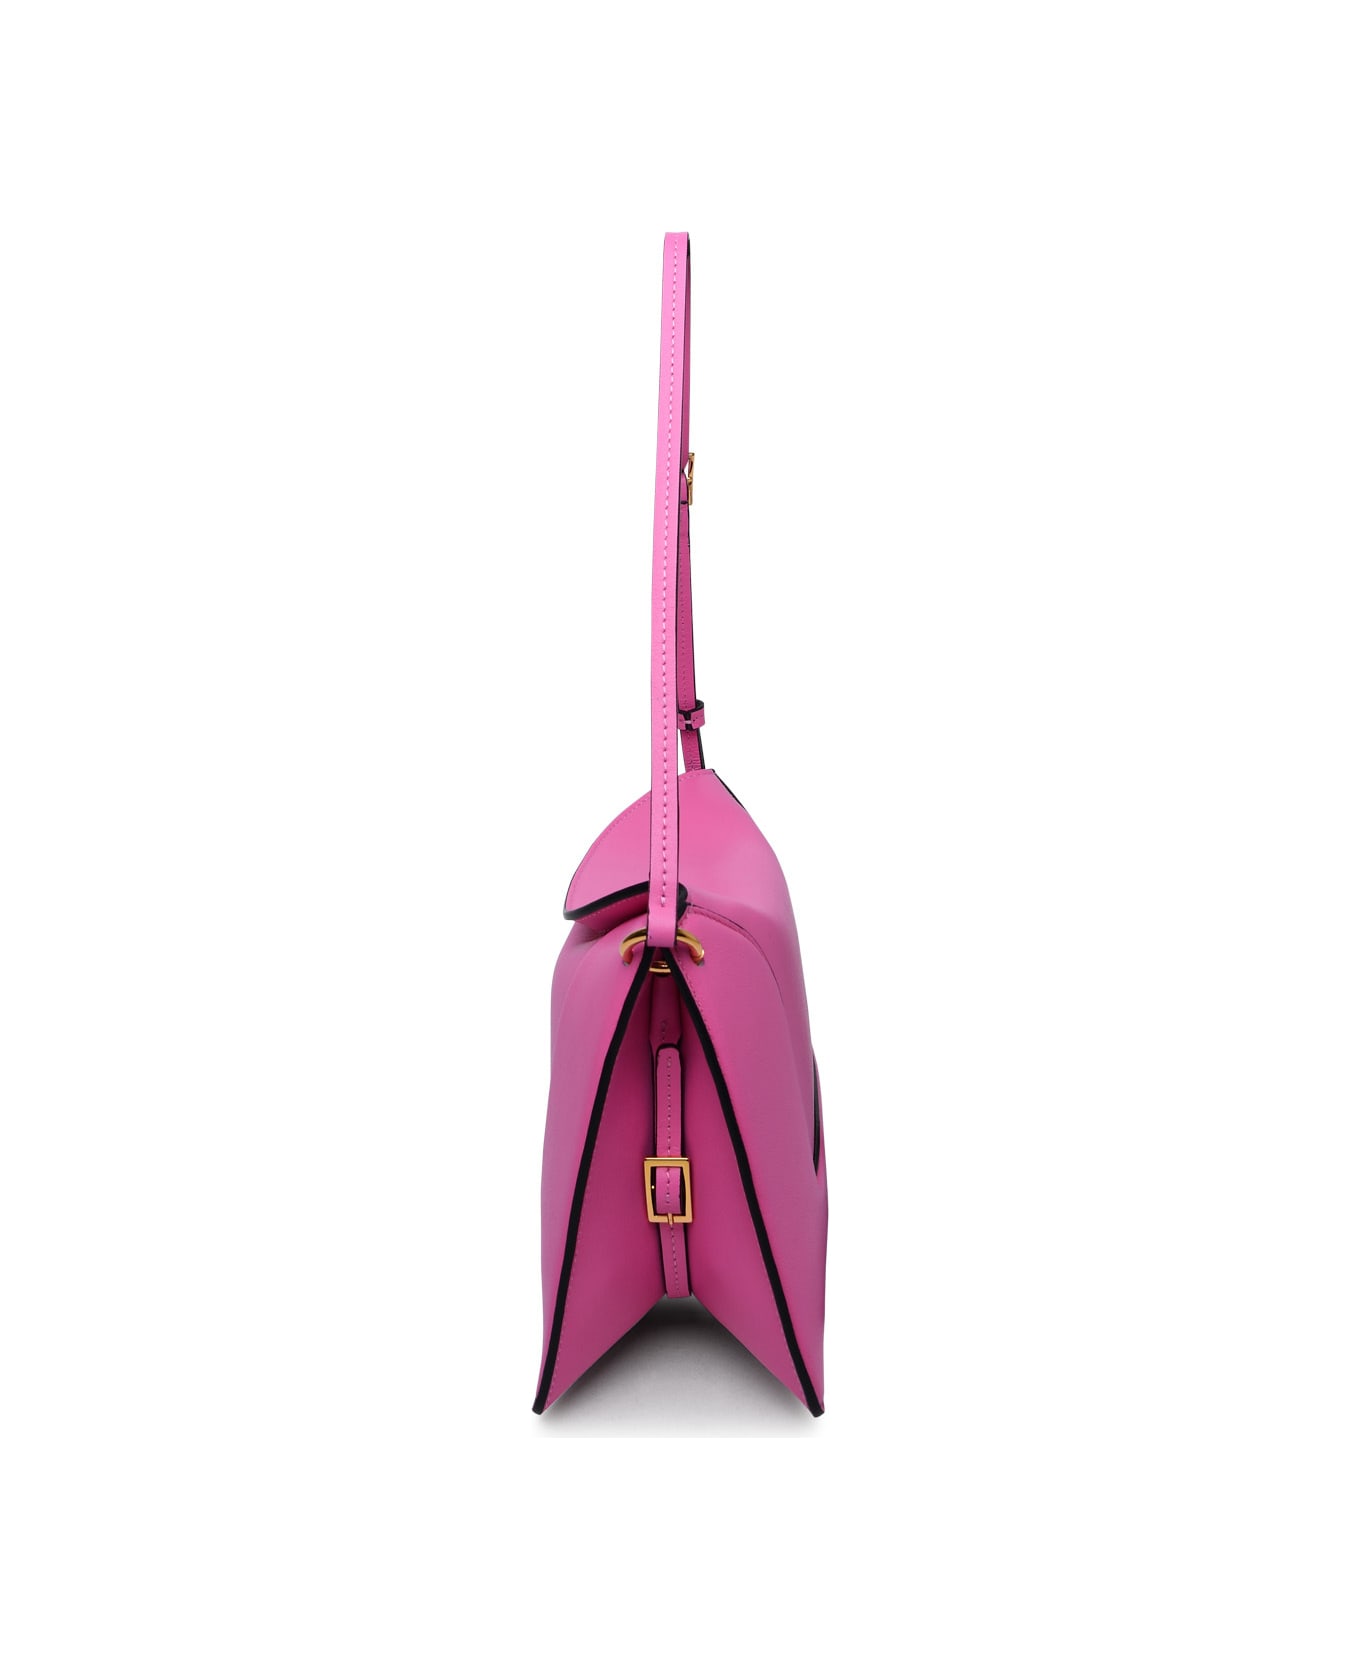 Wandler 'penelope' Pink Calf Leather Bag - Fuchsia トートバッグ